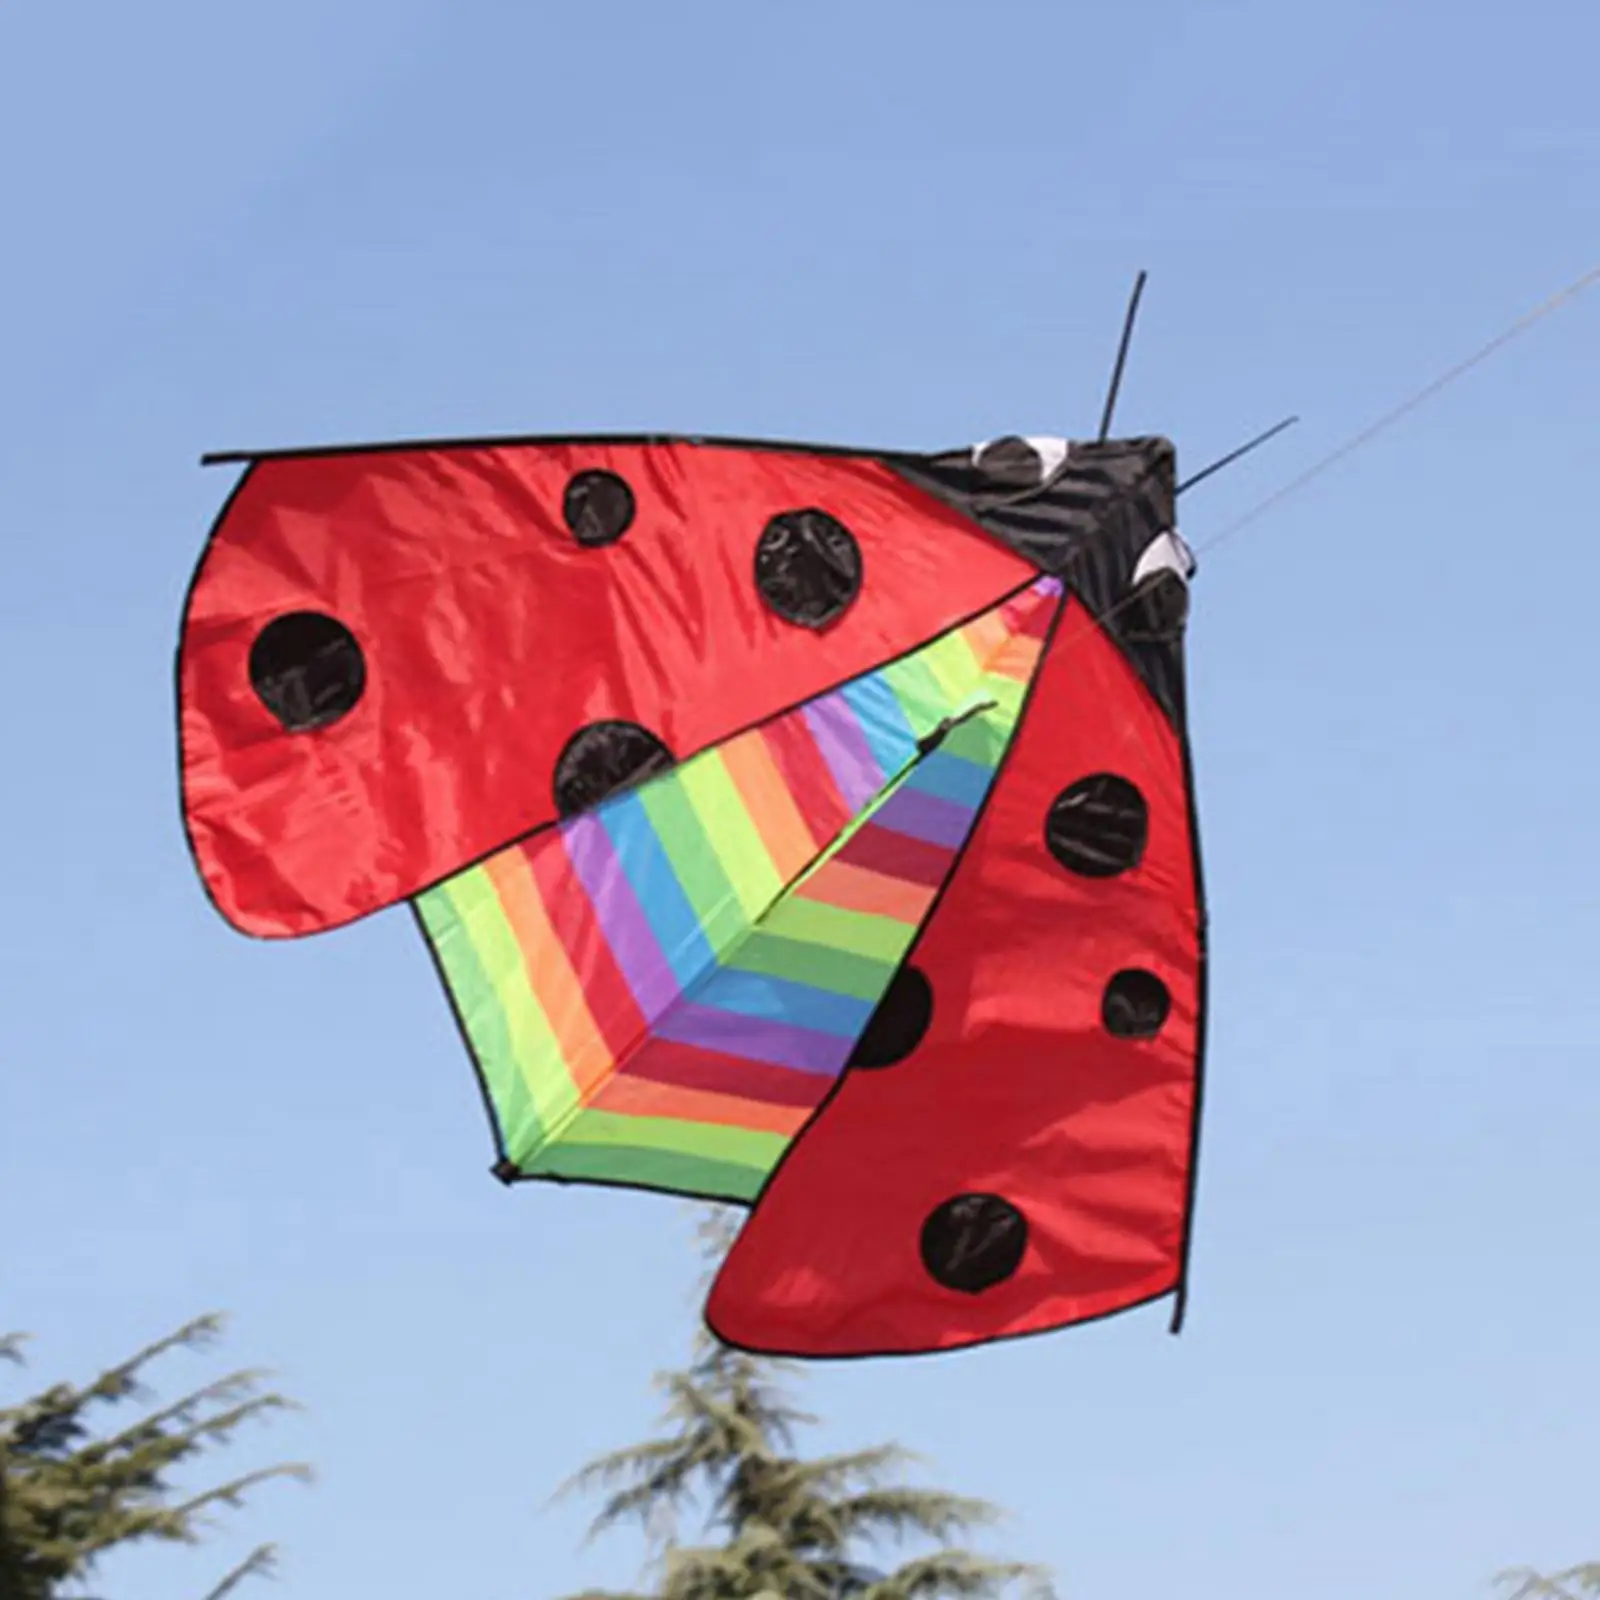 Large Delta  Kite  Flyer Flying Toys Huge  Windsock Colorful Triangle Ladybug Kite  Beach Holiday Garden Sports